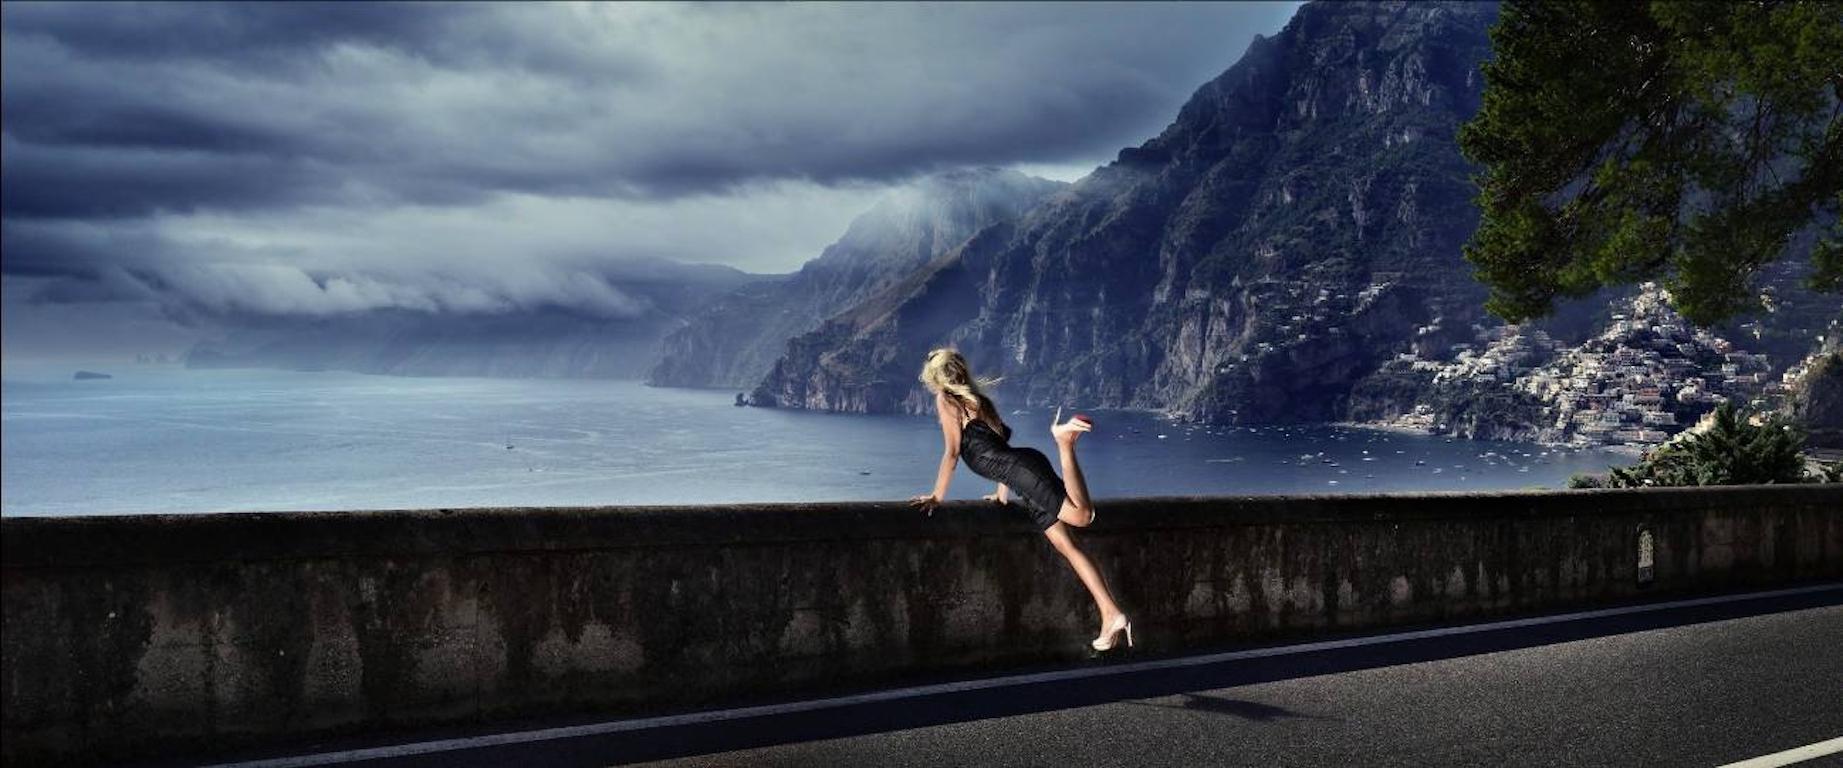 David Drebin Landscape Photograph - Italian Fantasy 